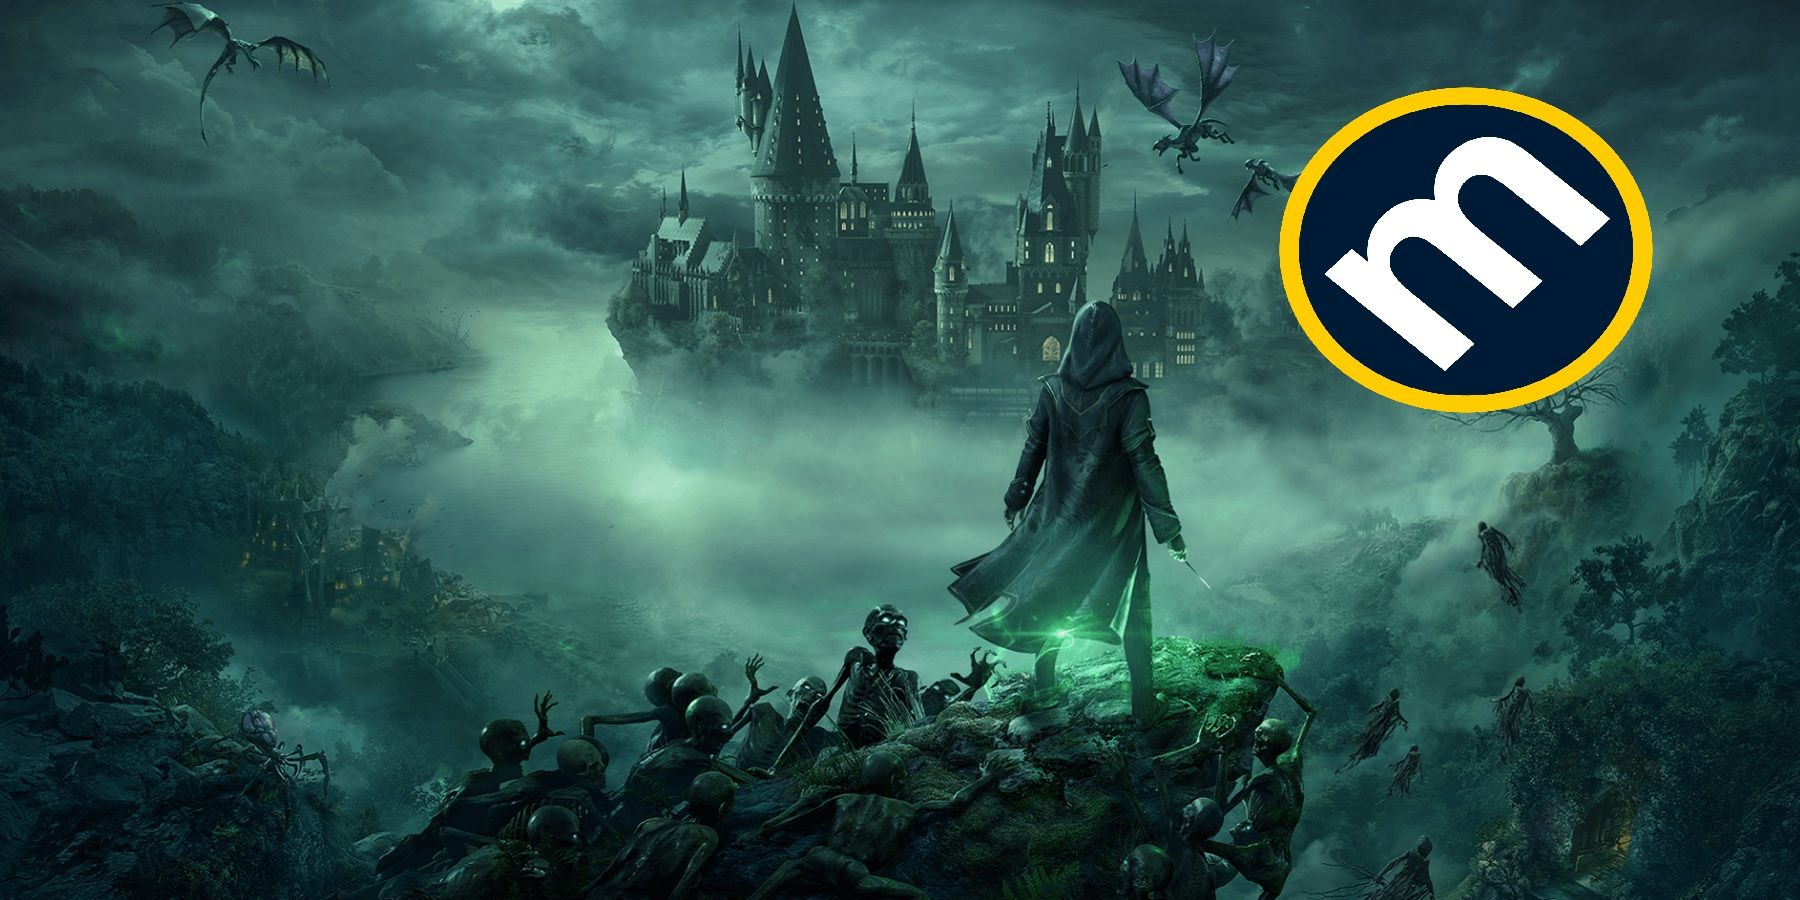 Hogwarts Legacy atinge nota extremamente positiva no Metacritic - SBT